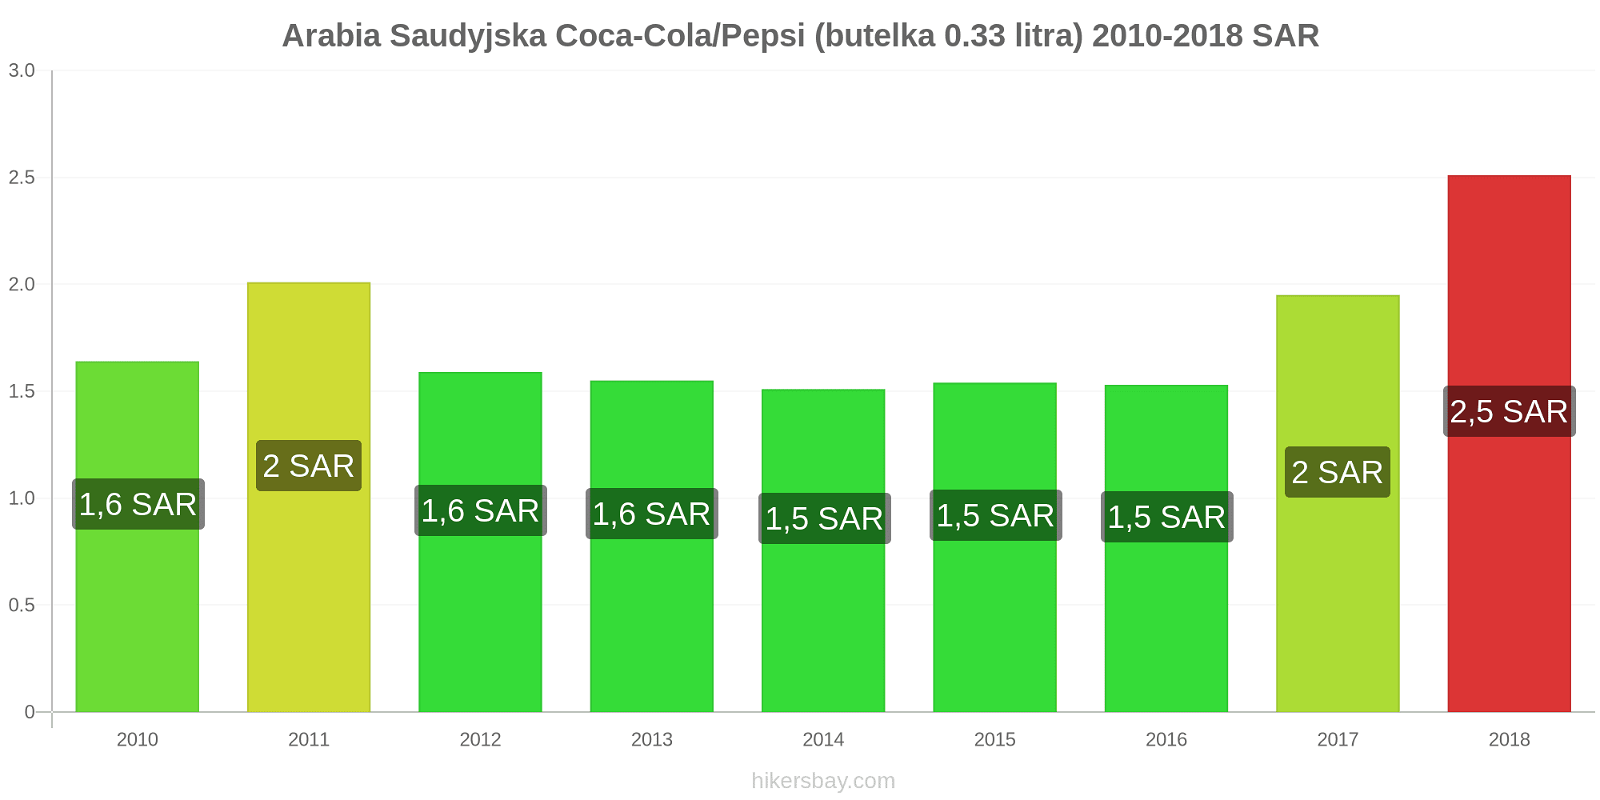 Arabia Saudyjska zmiany cen Coca-Cola/Pepsi (butelka 0.33 litra) hikersbay.com